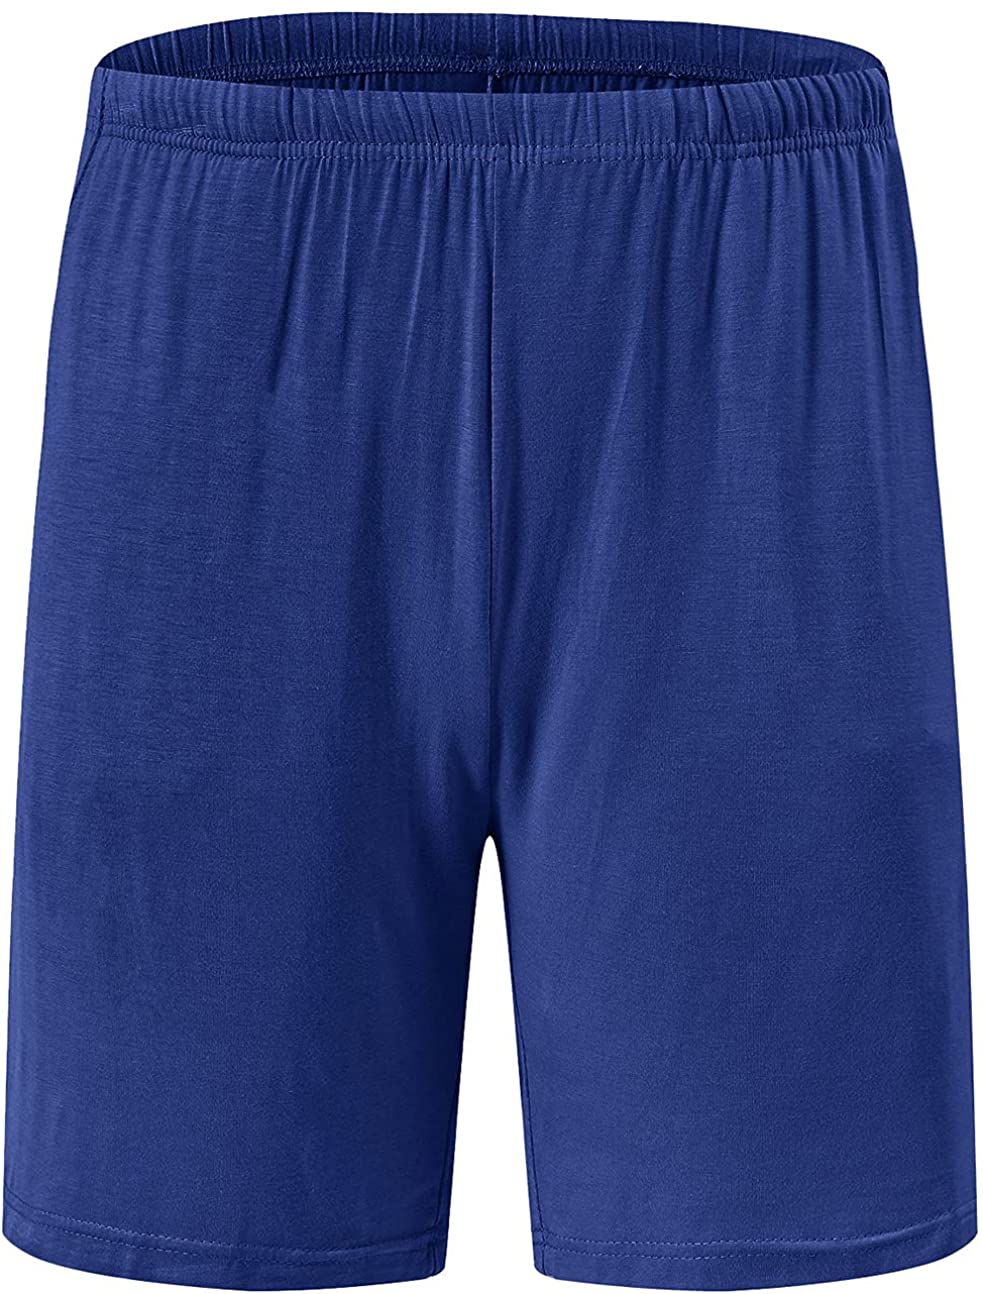 Men's Pajama Shorts Sleeping Stretch Boxer Shorts Ultra-Soft Modal Casual  Pajama Sleep Bottoms Pants